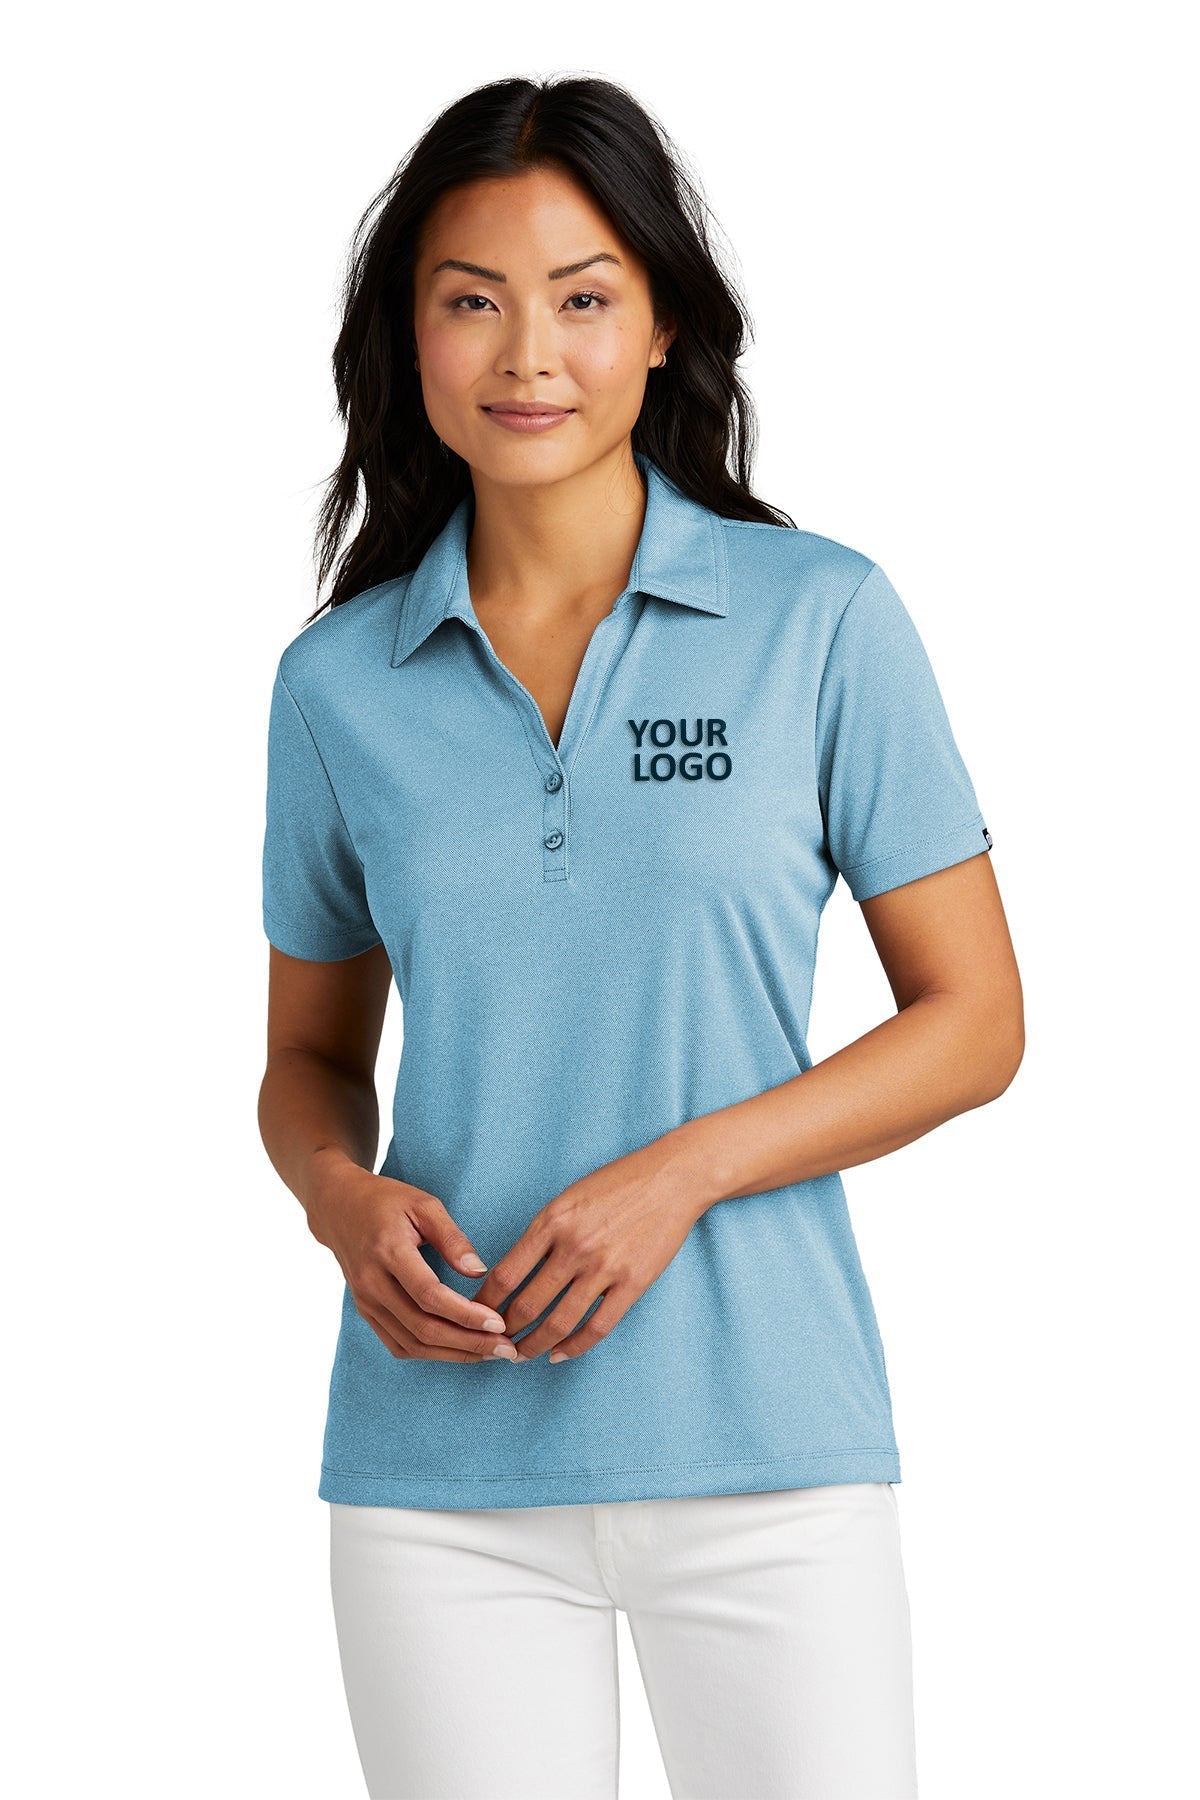 TravisMathew TM1WX002 Brilliant Blue Heather custom polo shirts with logo